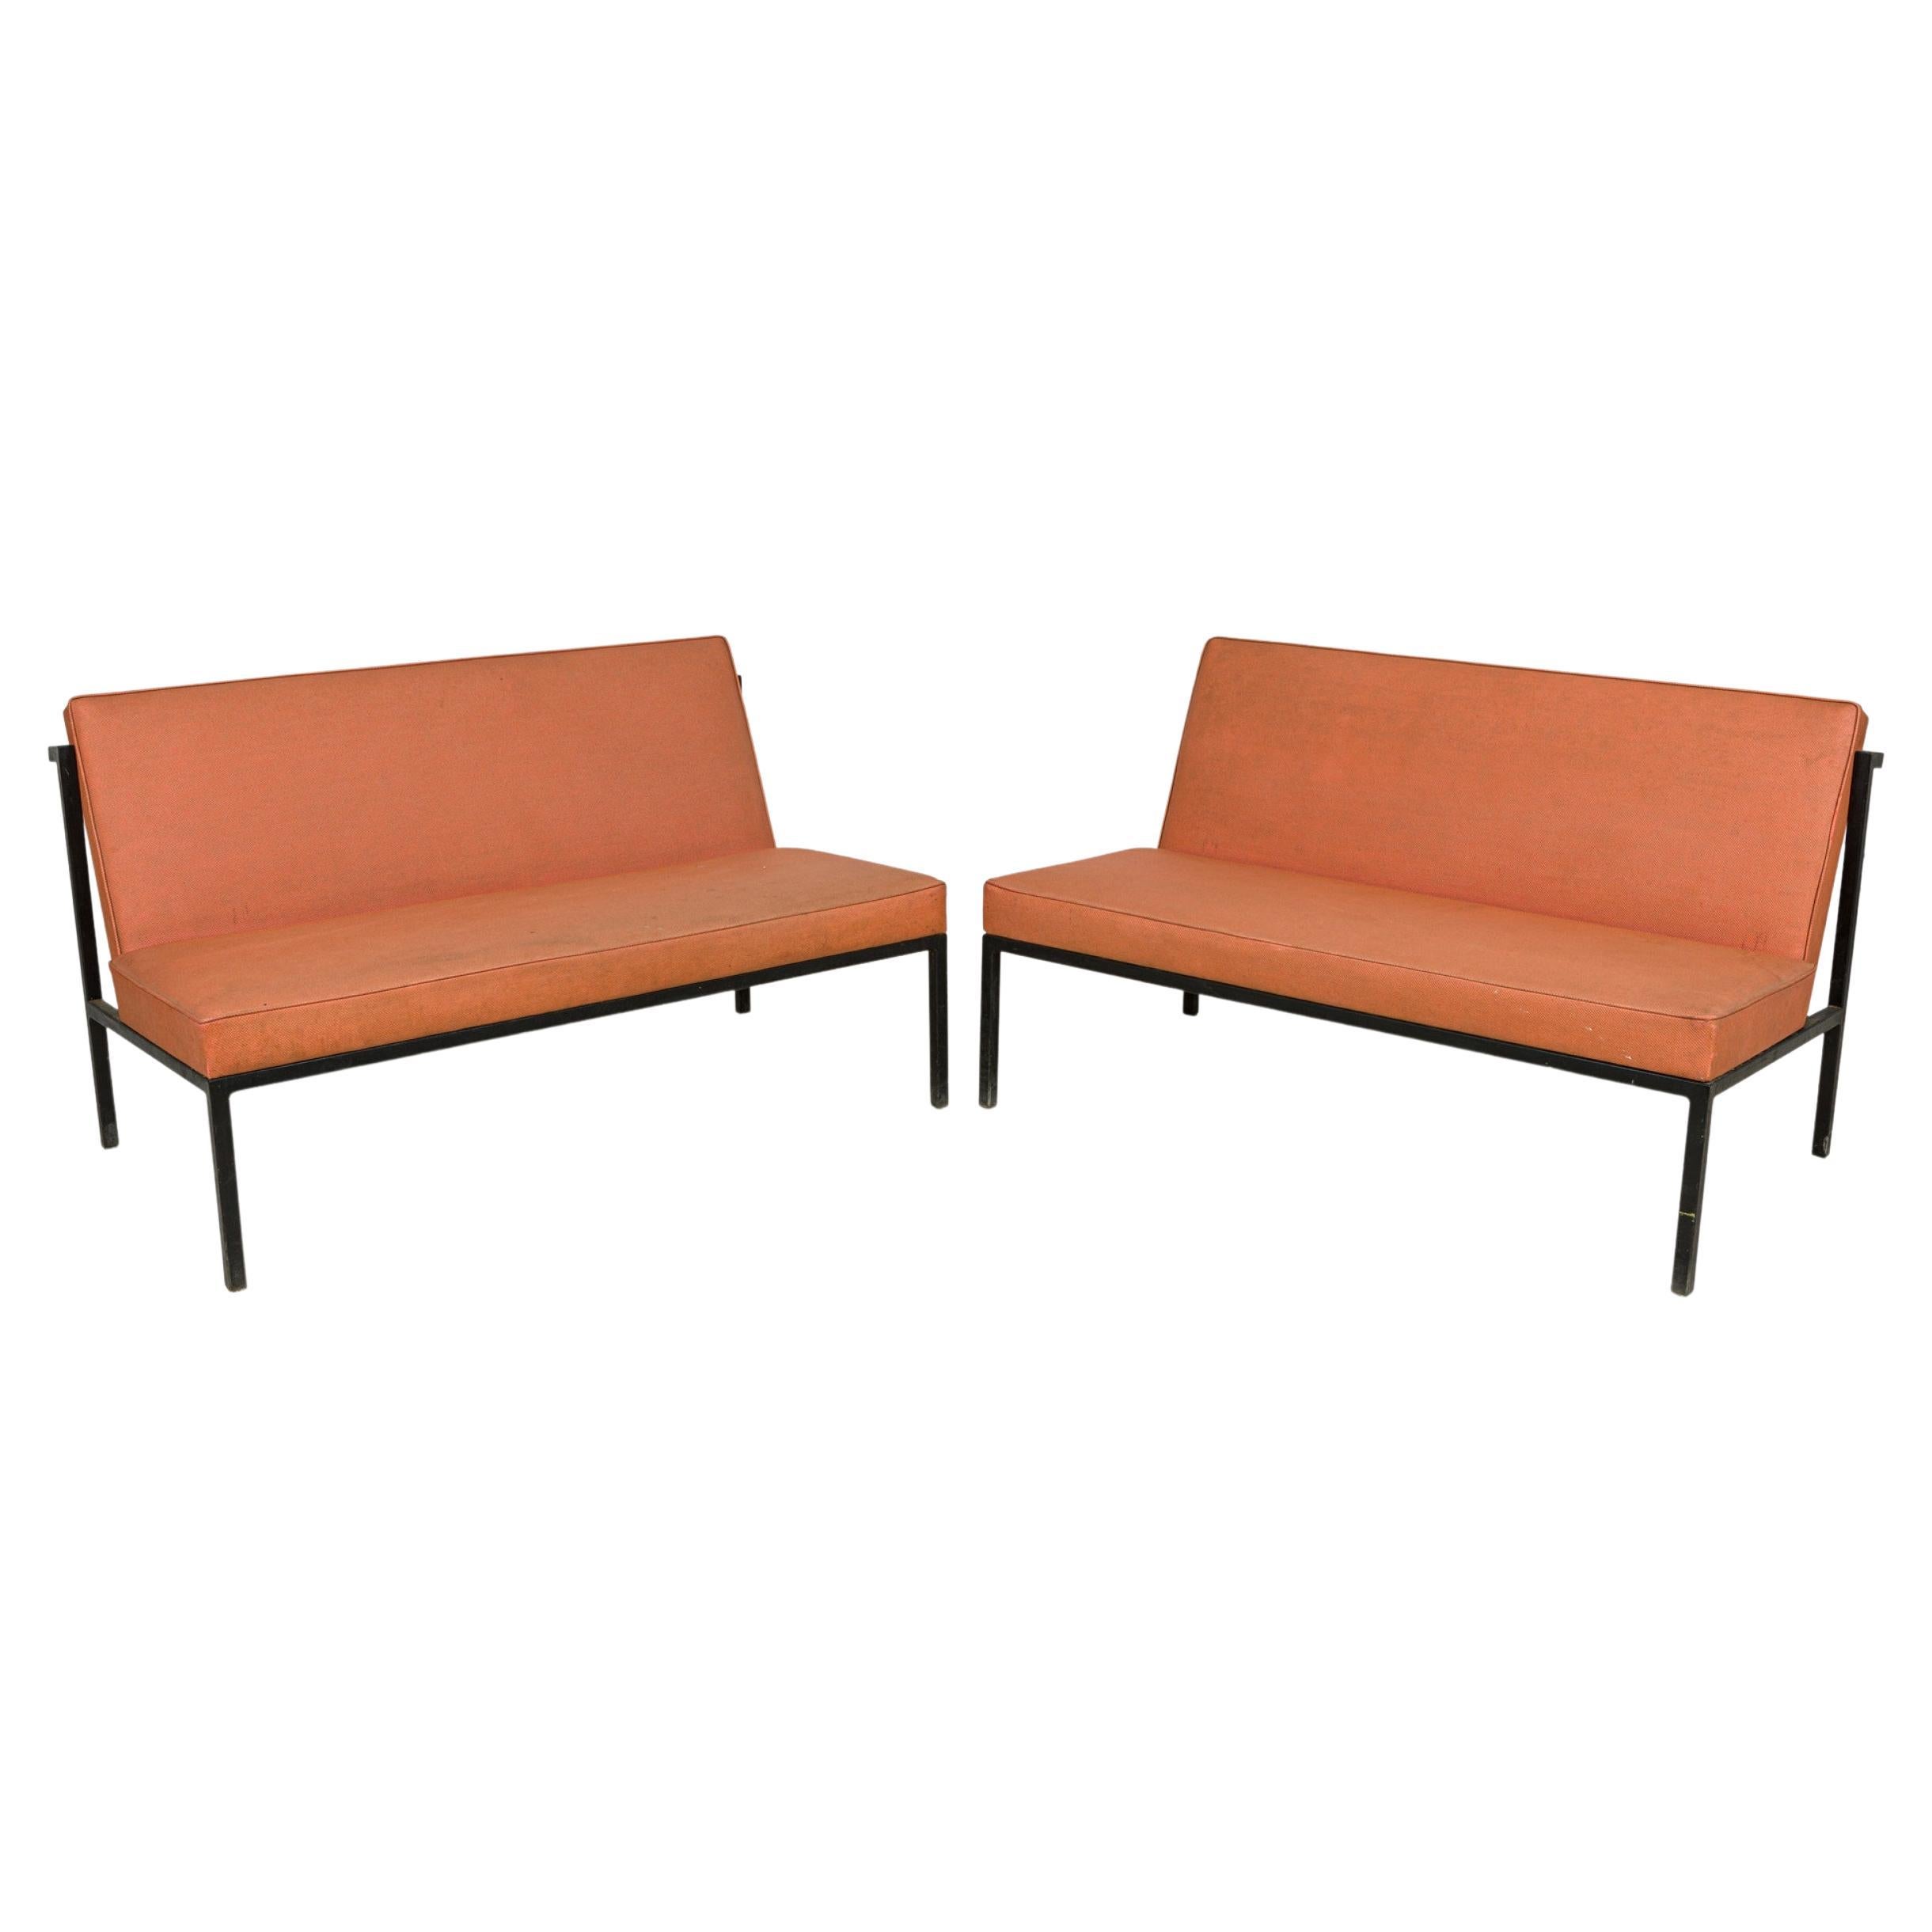 Ein Paar Florence Knoll / Knoll Light Orange gepolsterte Sofas